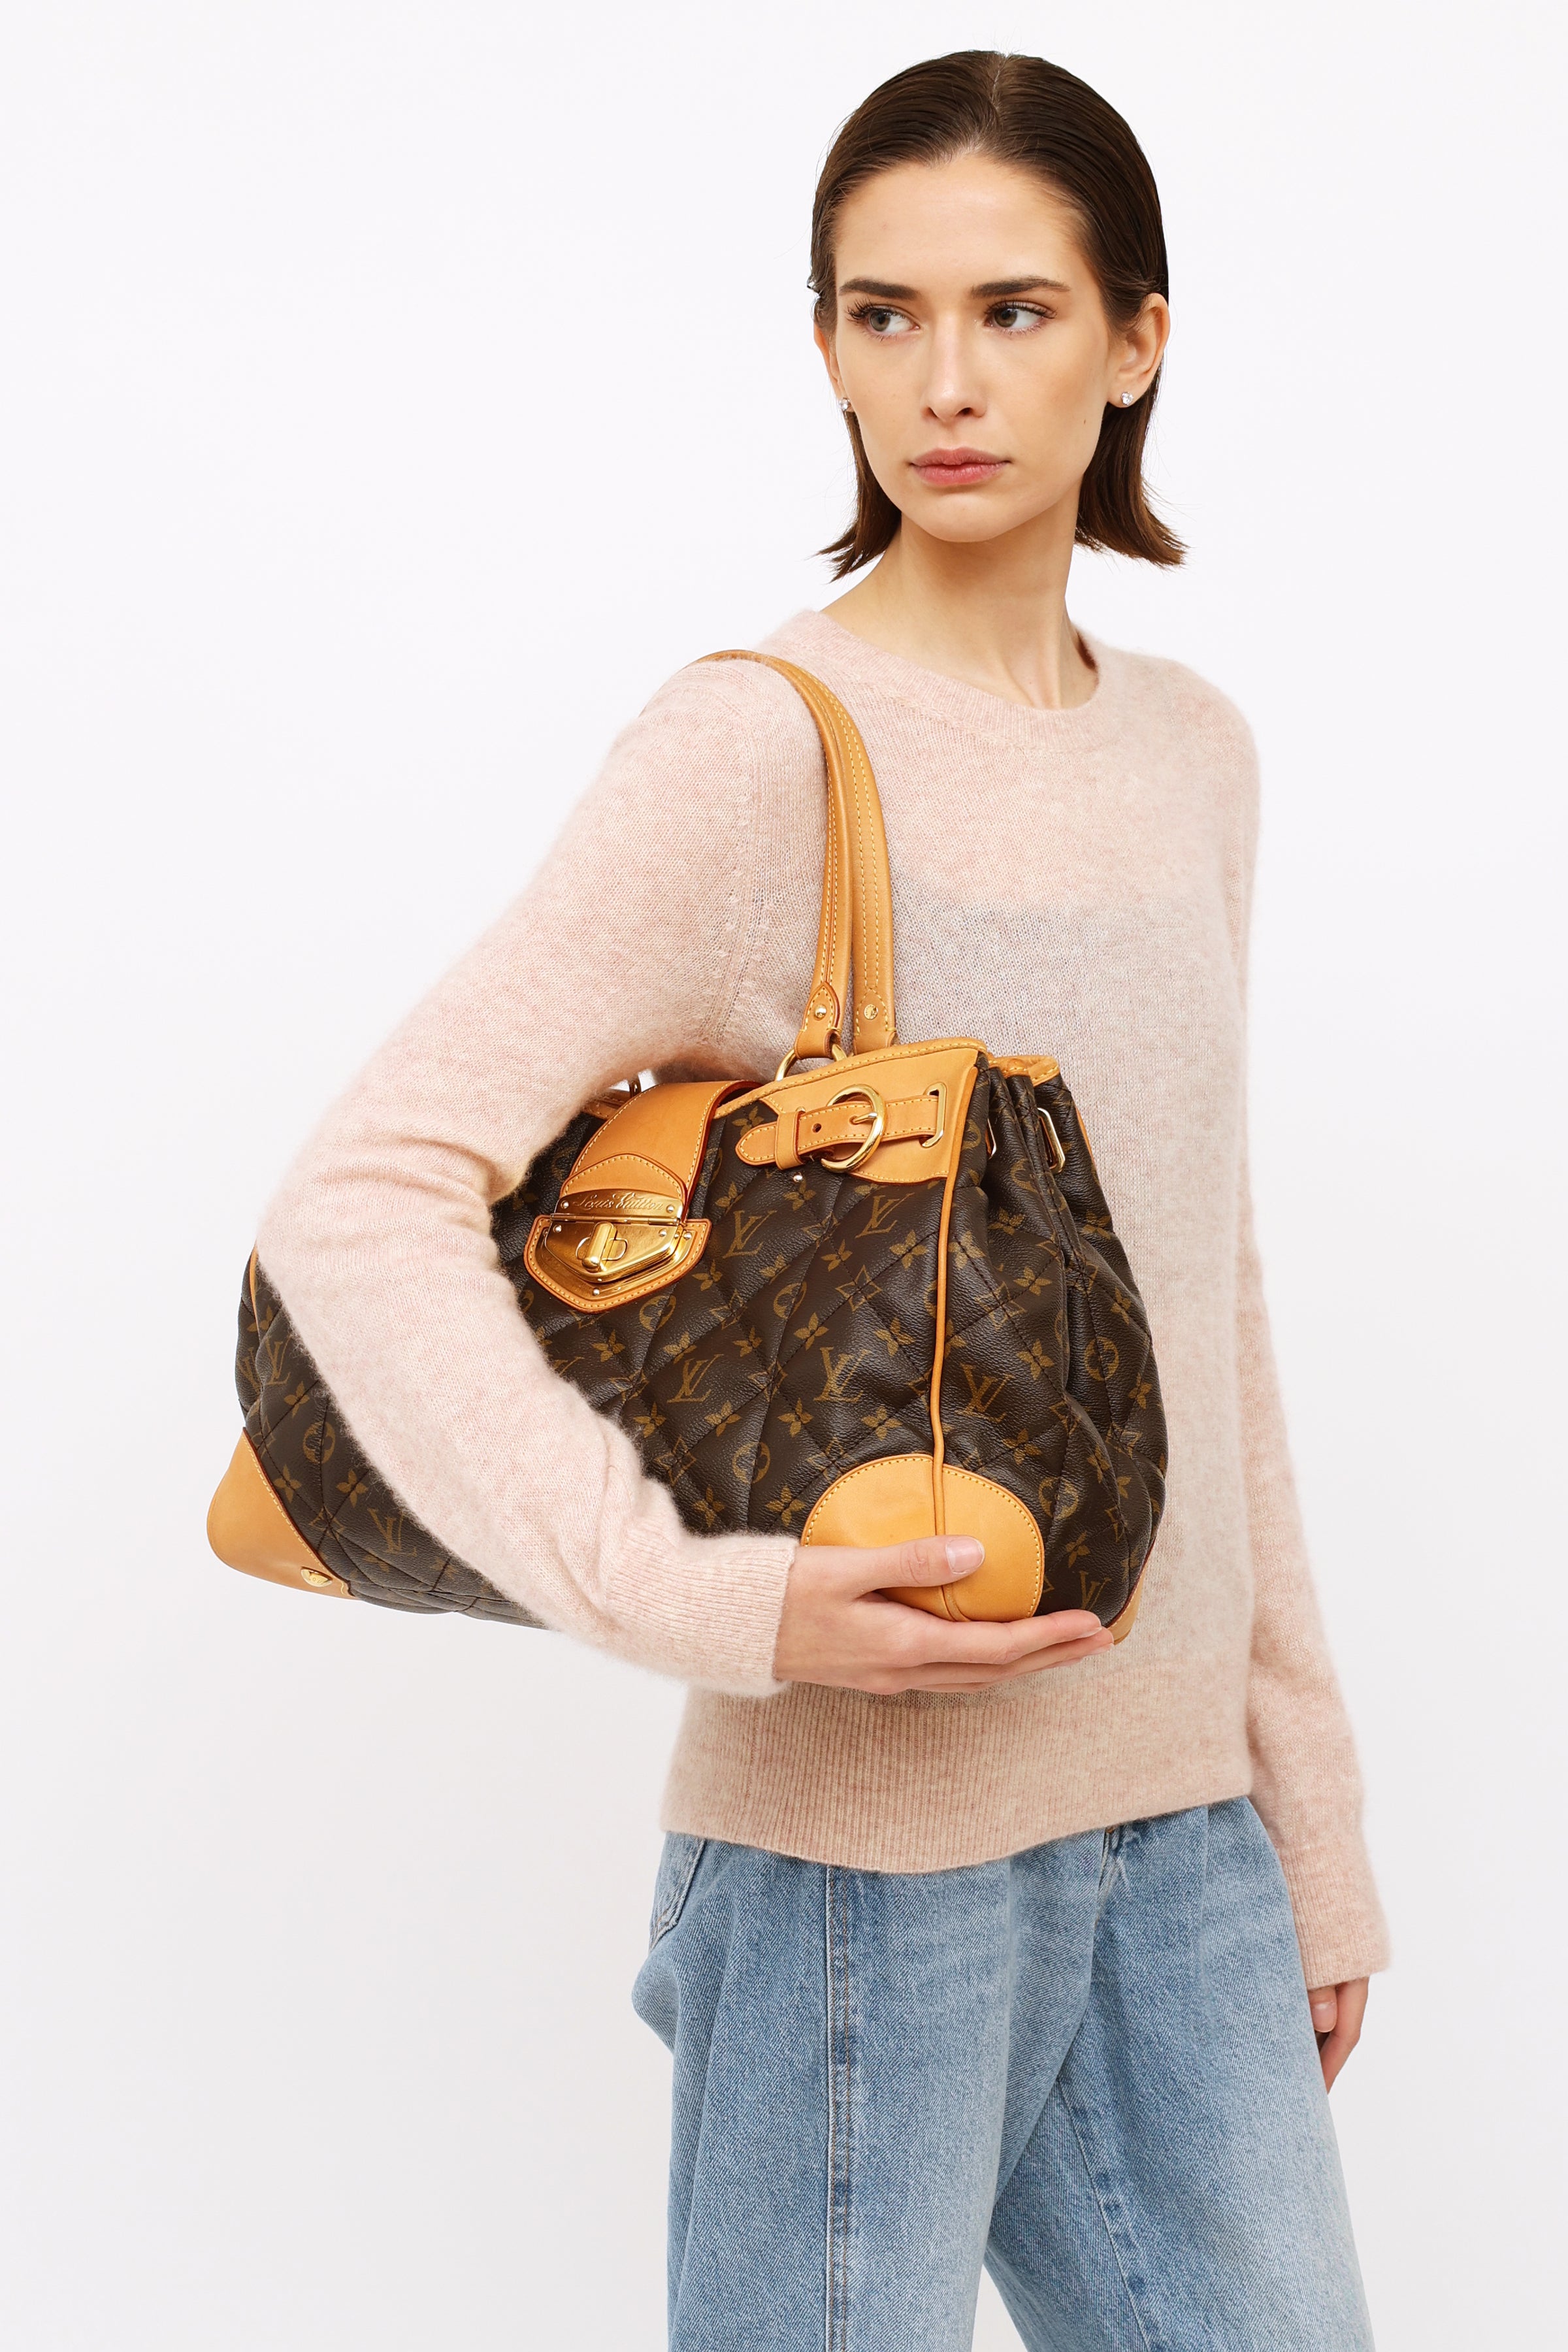 Louis Vuitton Monogram Etoile Shopper Bag